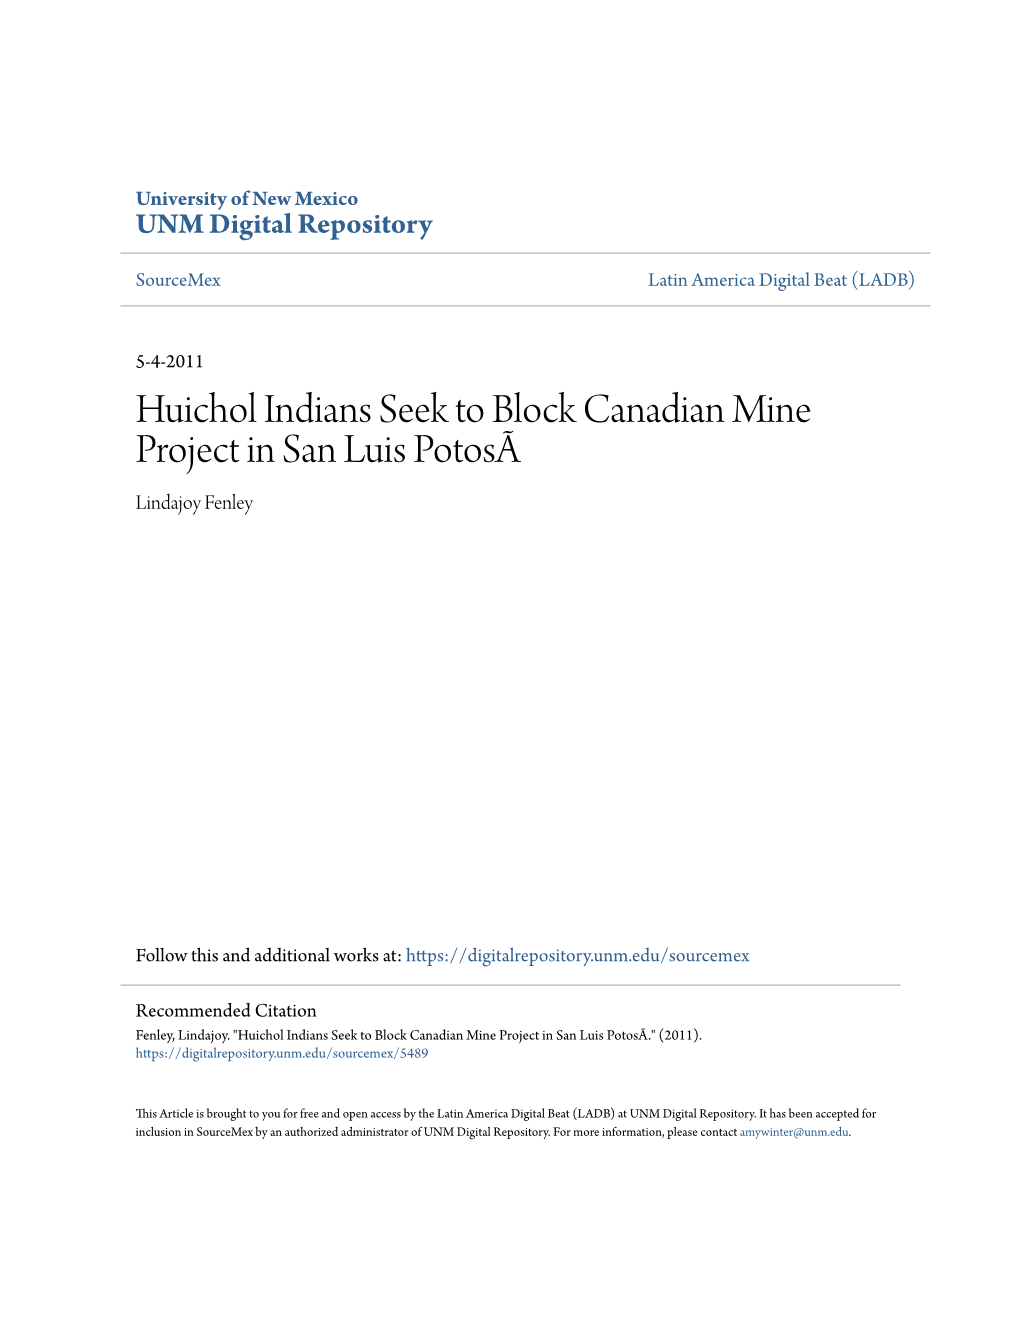 Huichol Indians Seek to Block Canadian Mine Project in San Luis Potosã Lindajoy Fenley